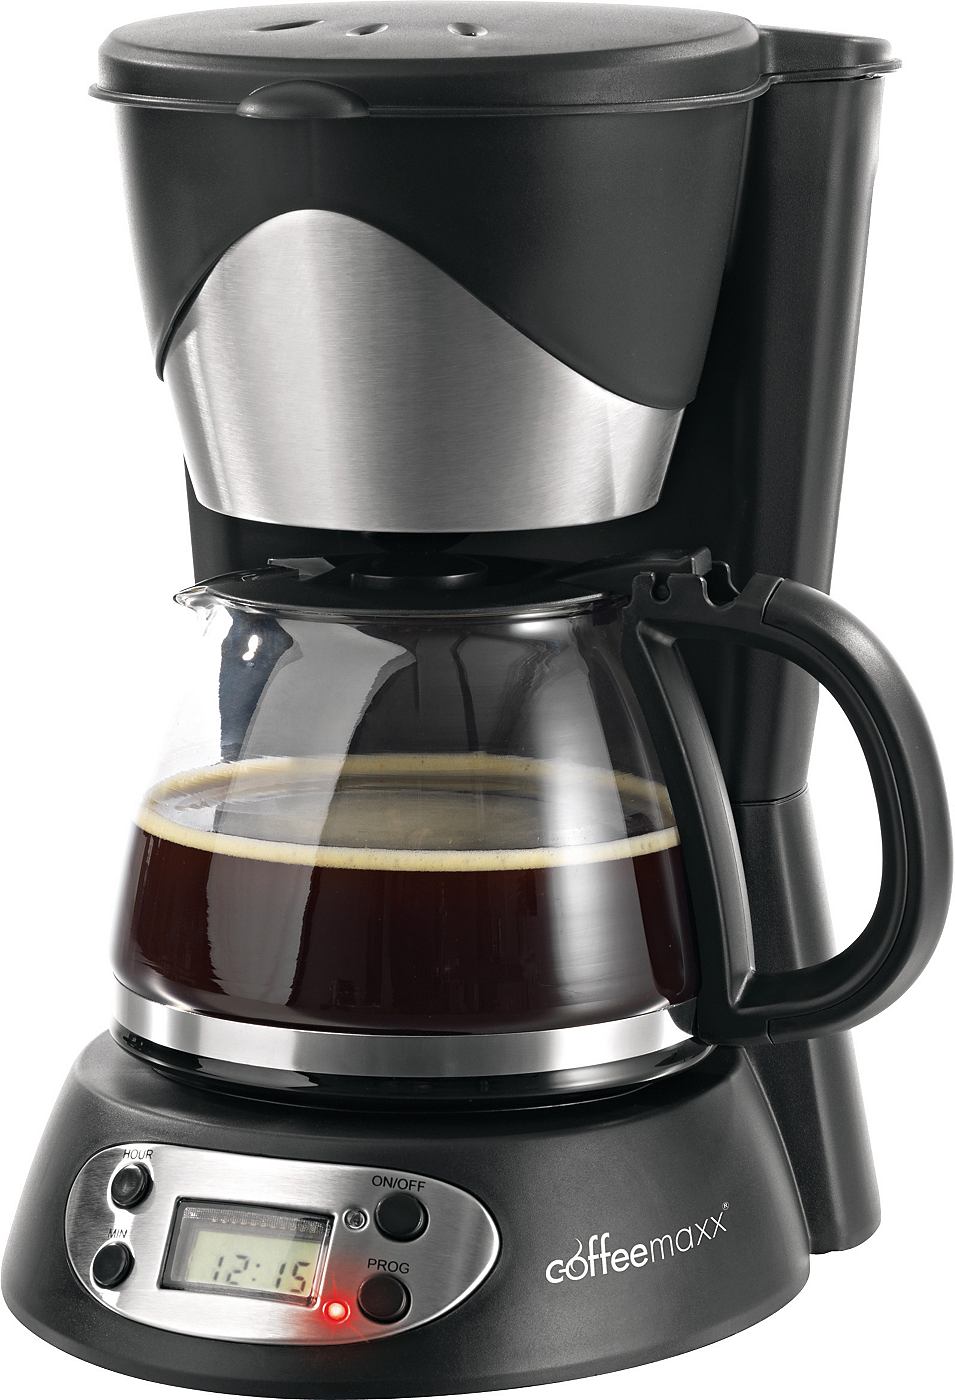 Kaffeemaschine coffeemaxx kompakt